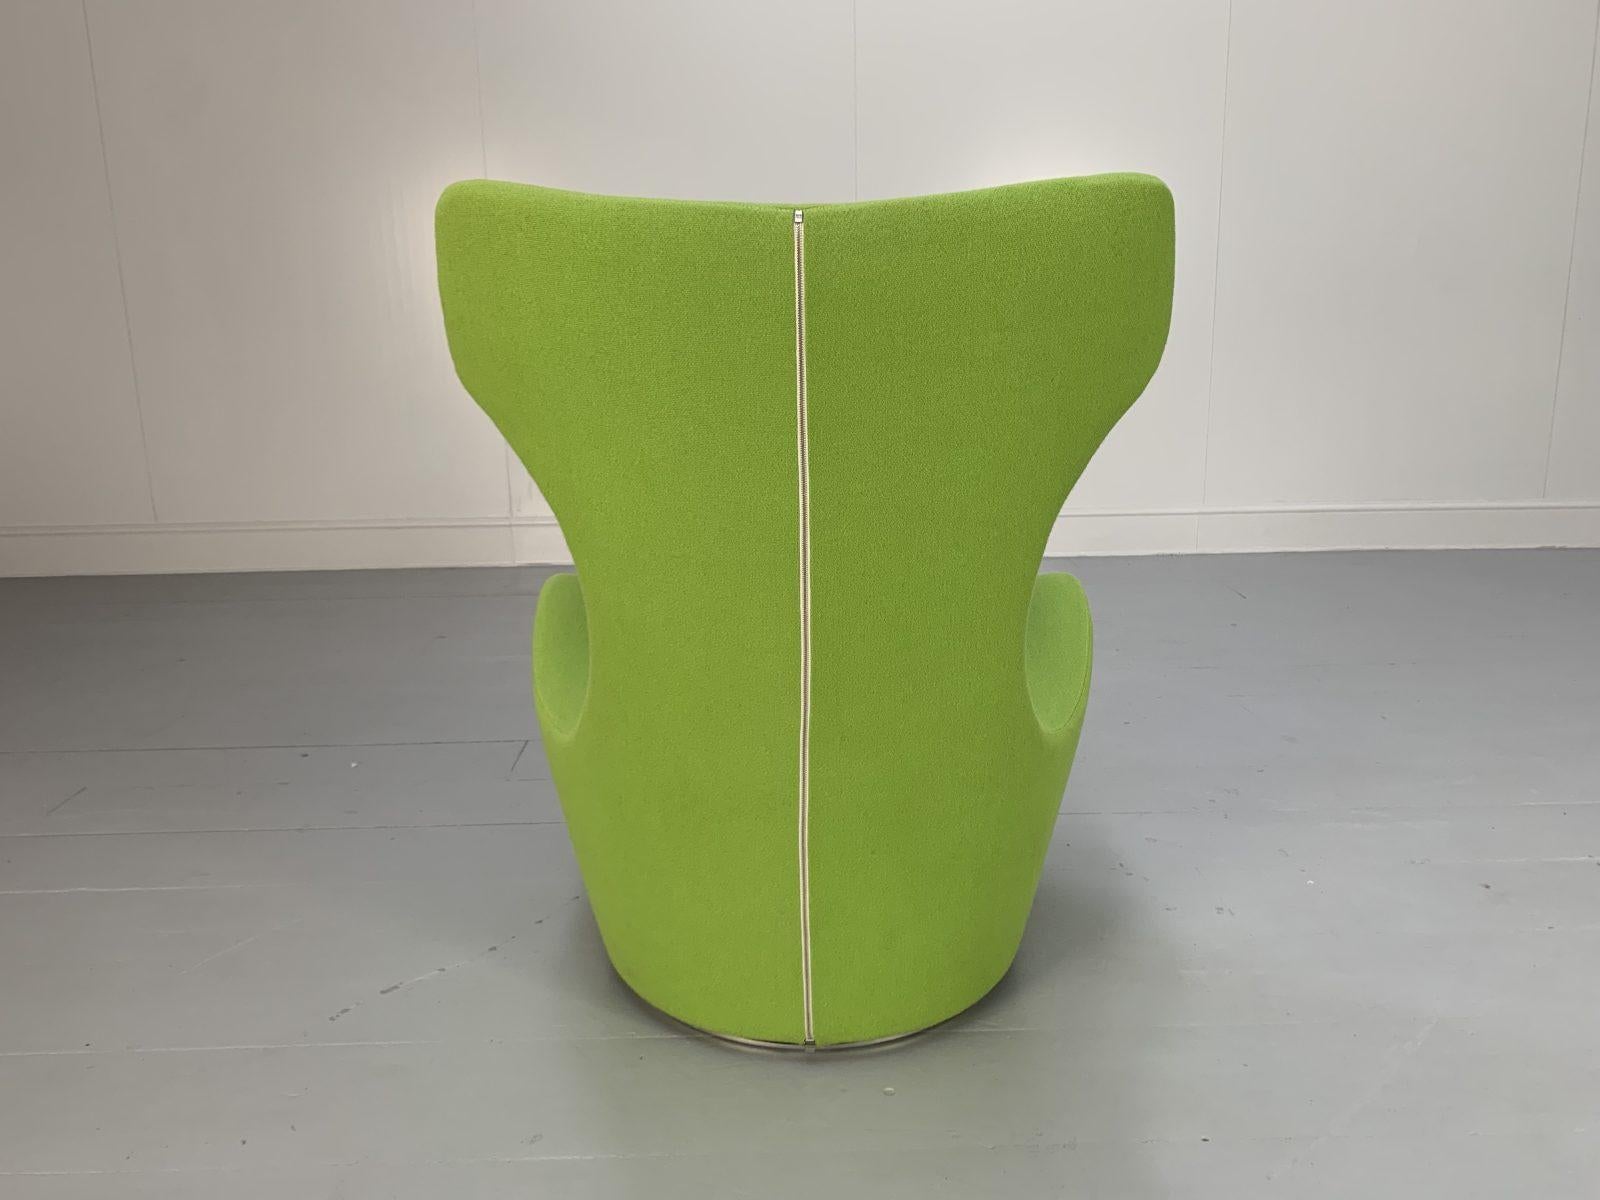 B&B Italia “Grande Papilio” Armchair – in Green “Ego” Wool In Good Condition For Sale In Barrowford, GB